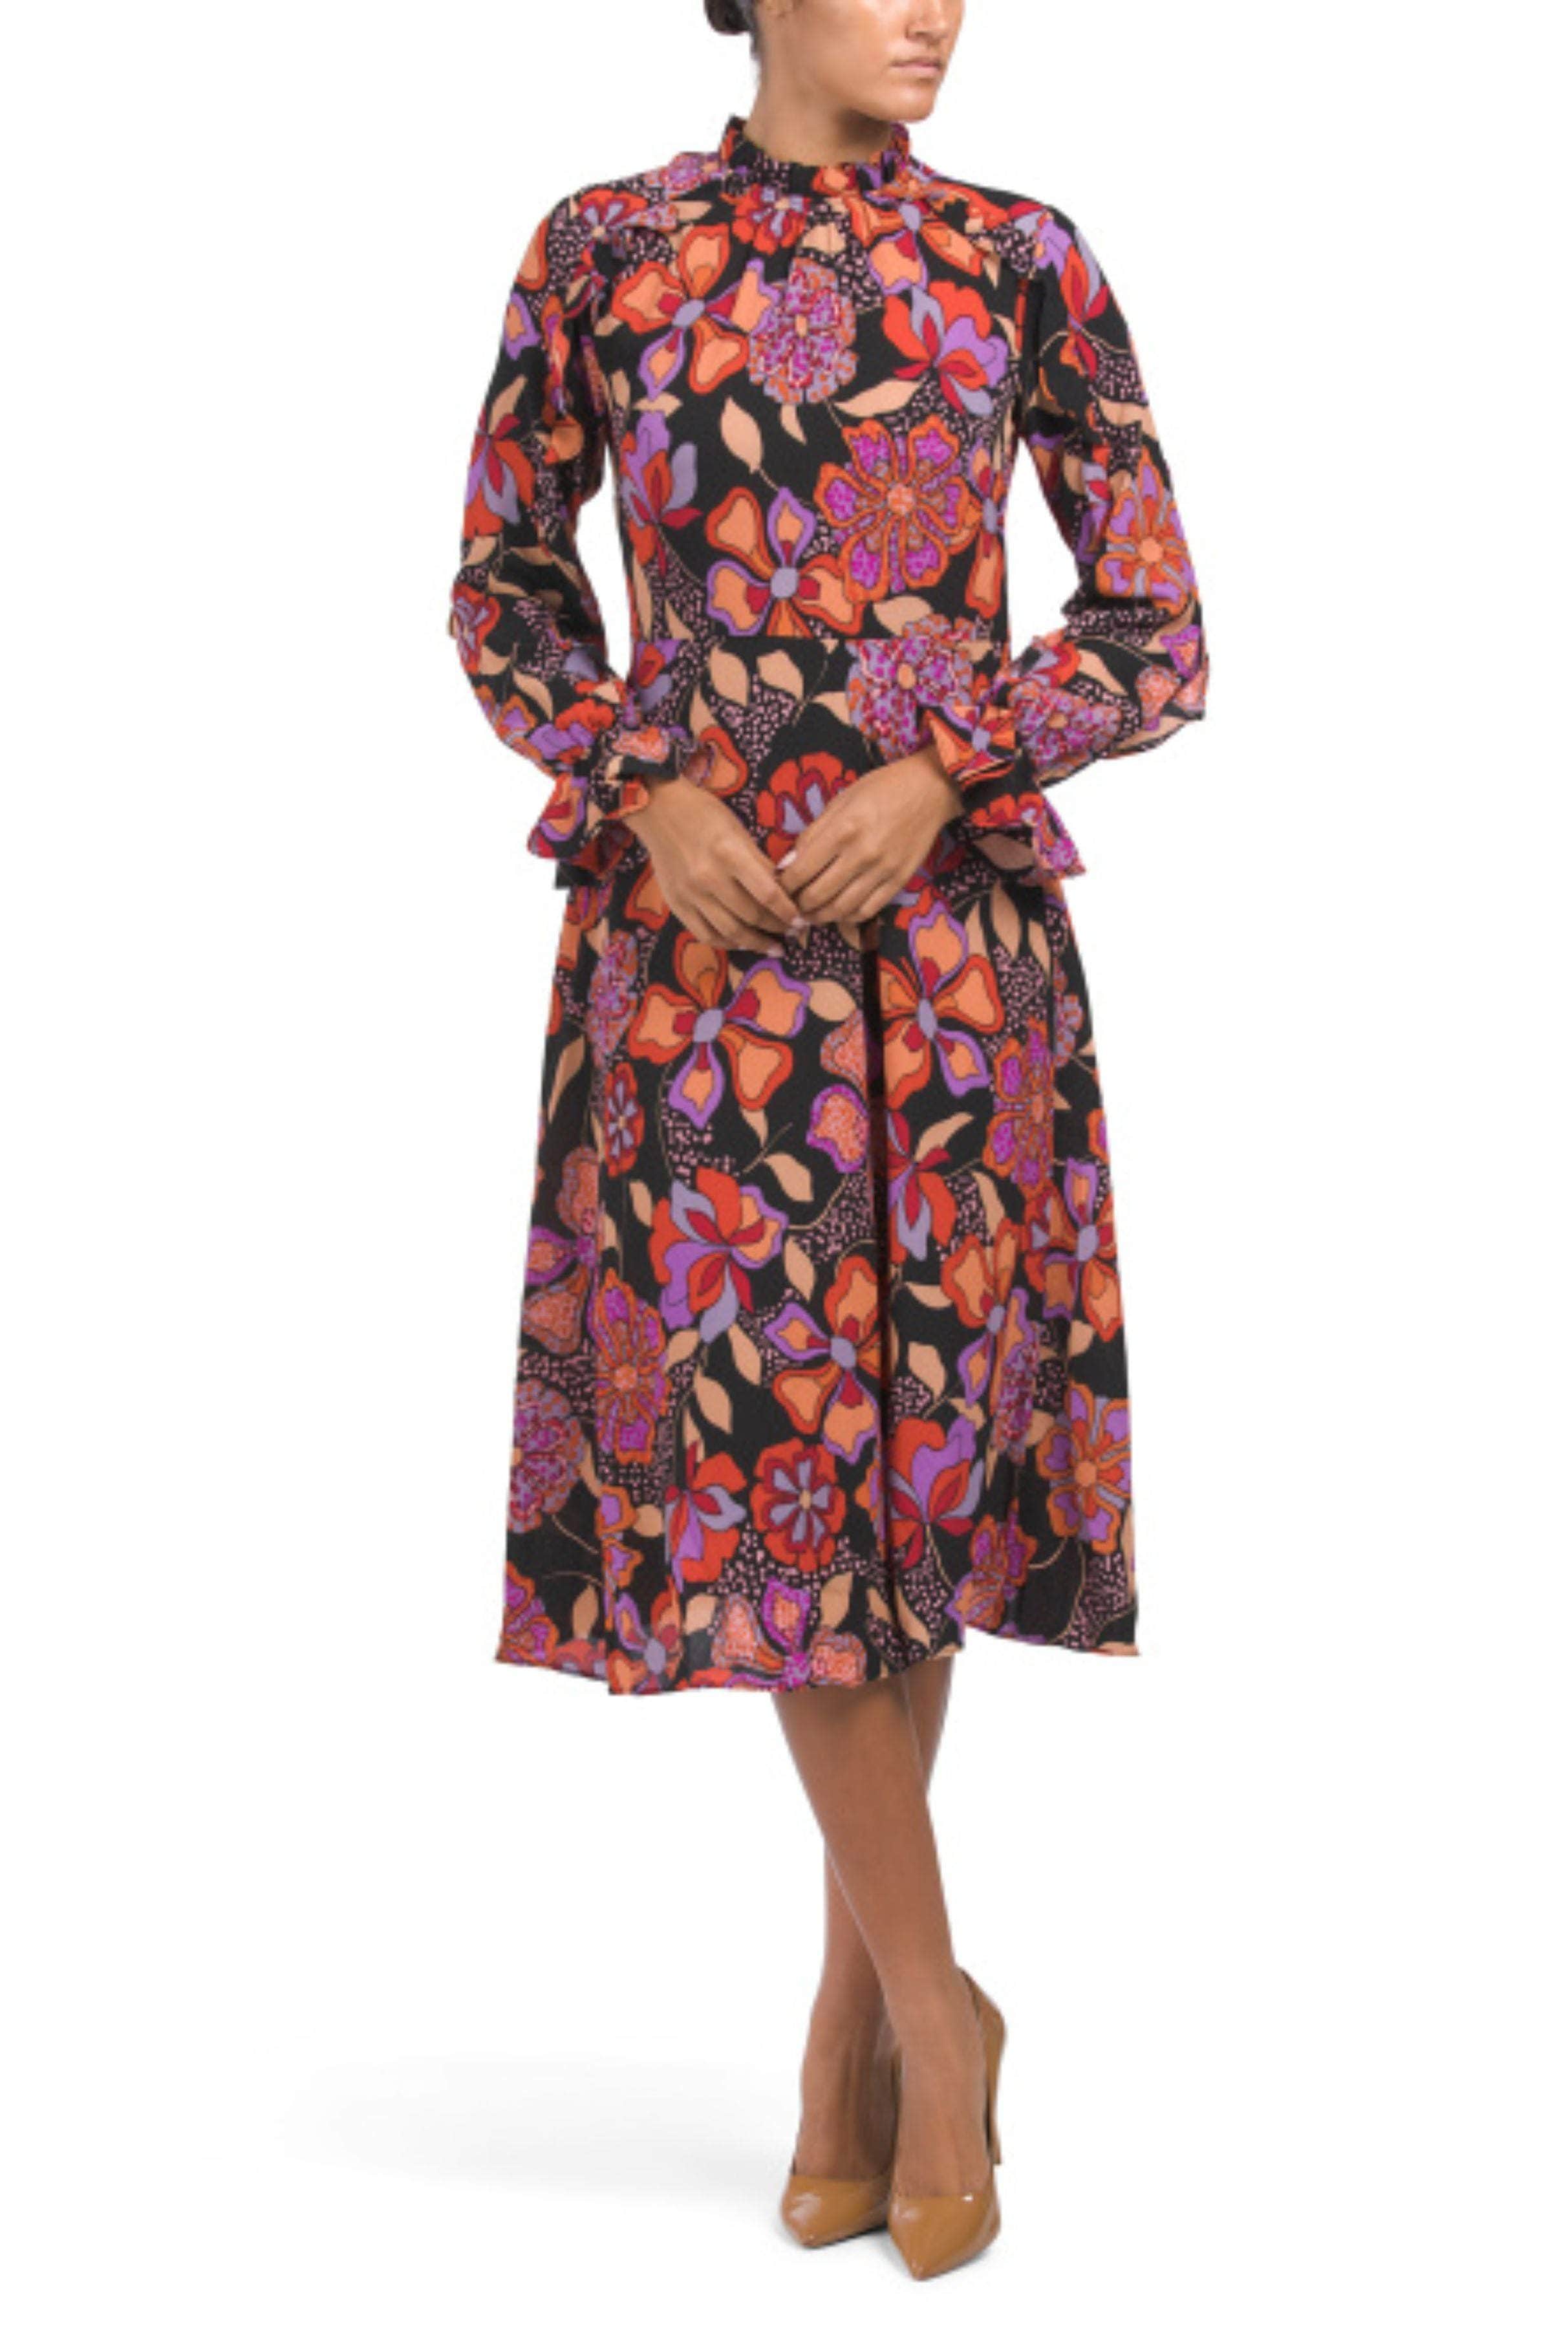 Donna Morgan D9147M - High Neck Long Sleeve Formal Dress
